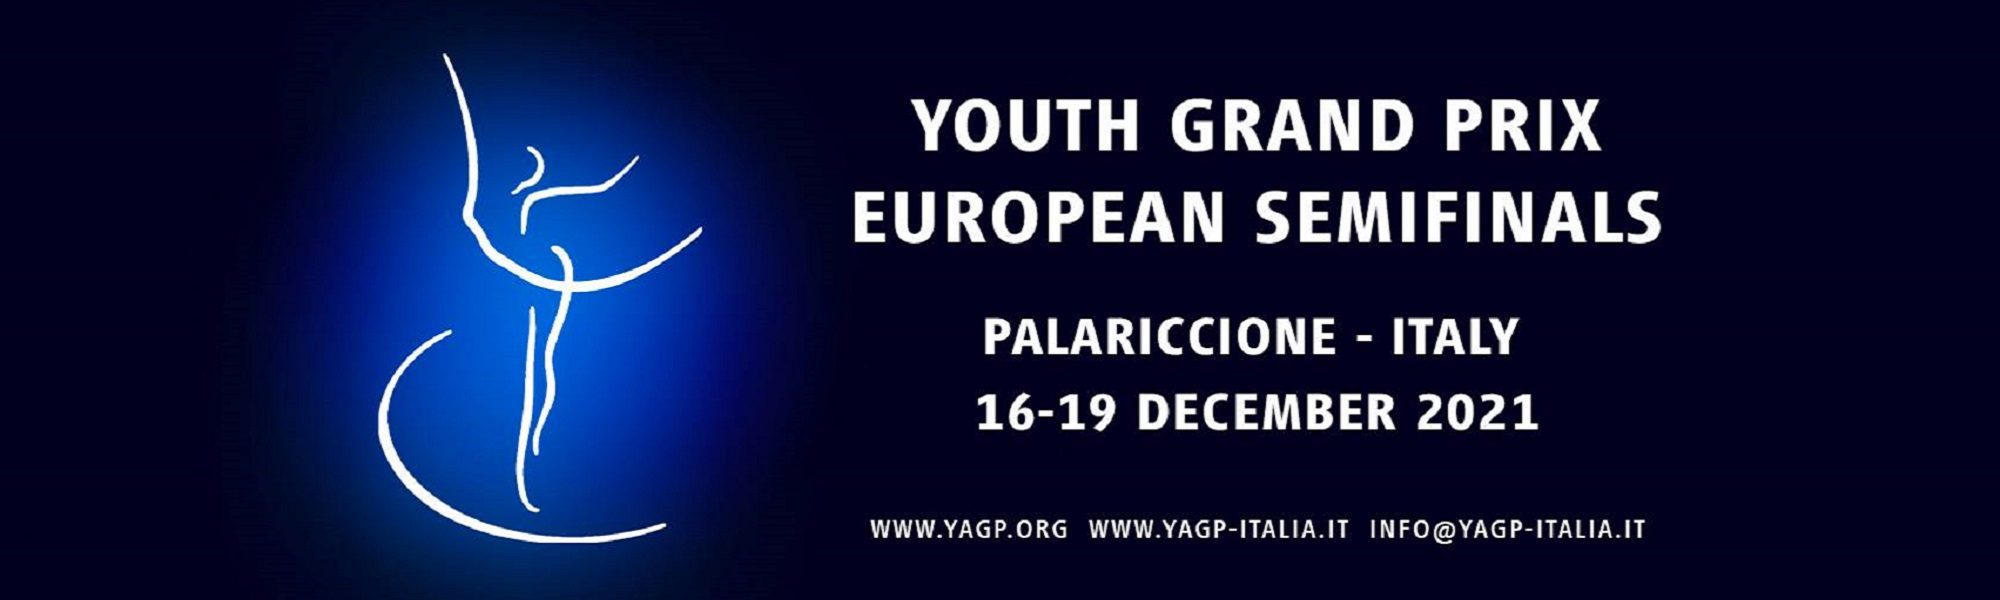 YAGP; danza; youth grand prix